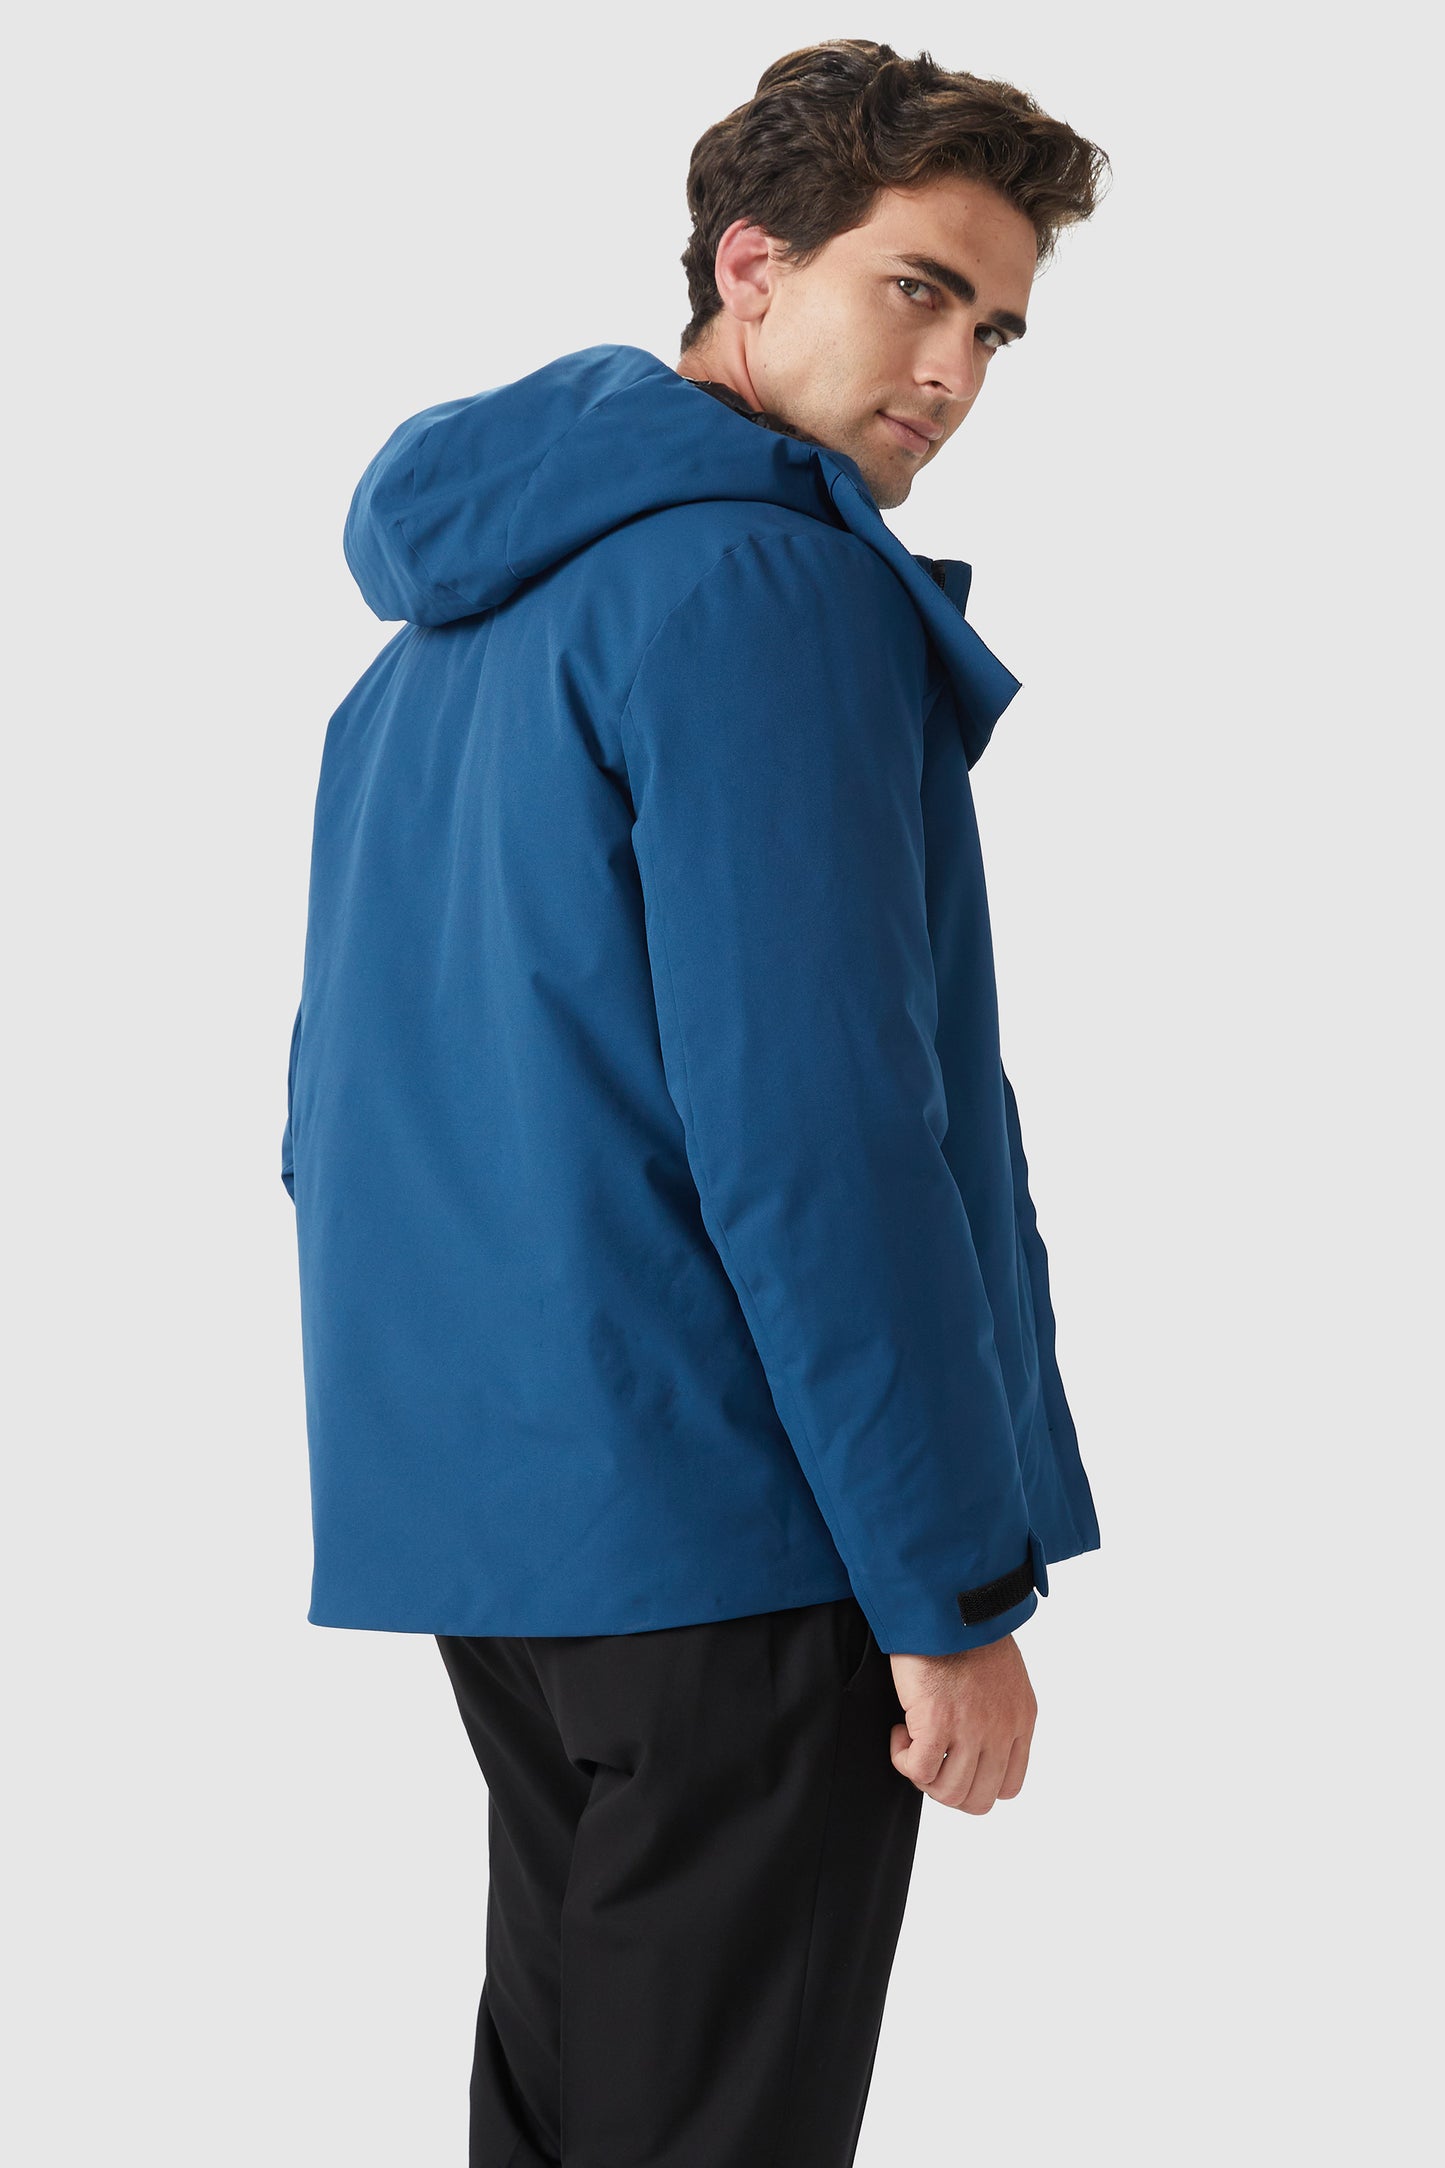 Waterproof Winter Jacket with Hood